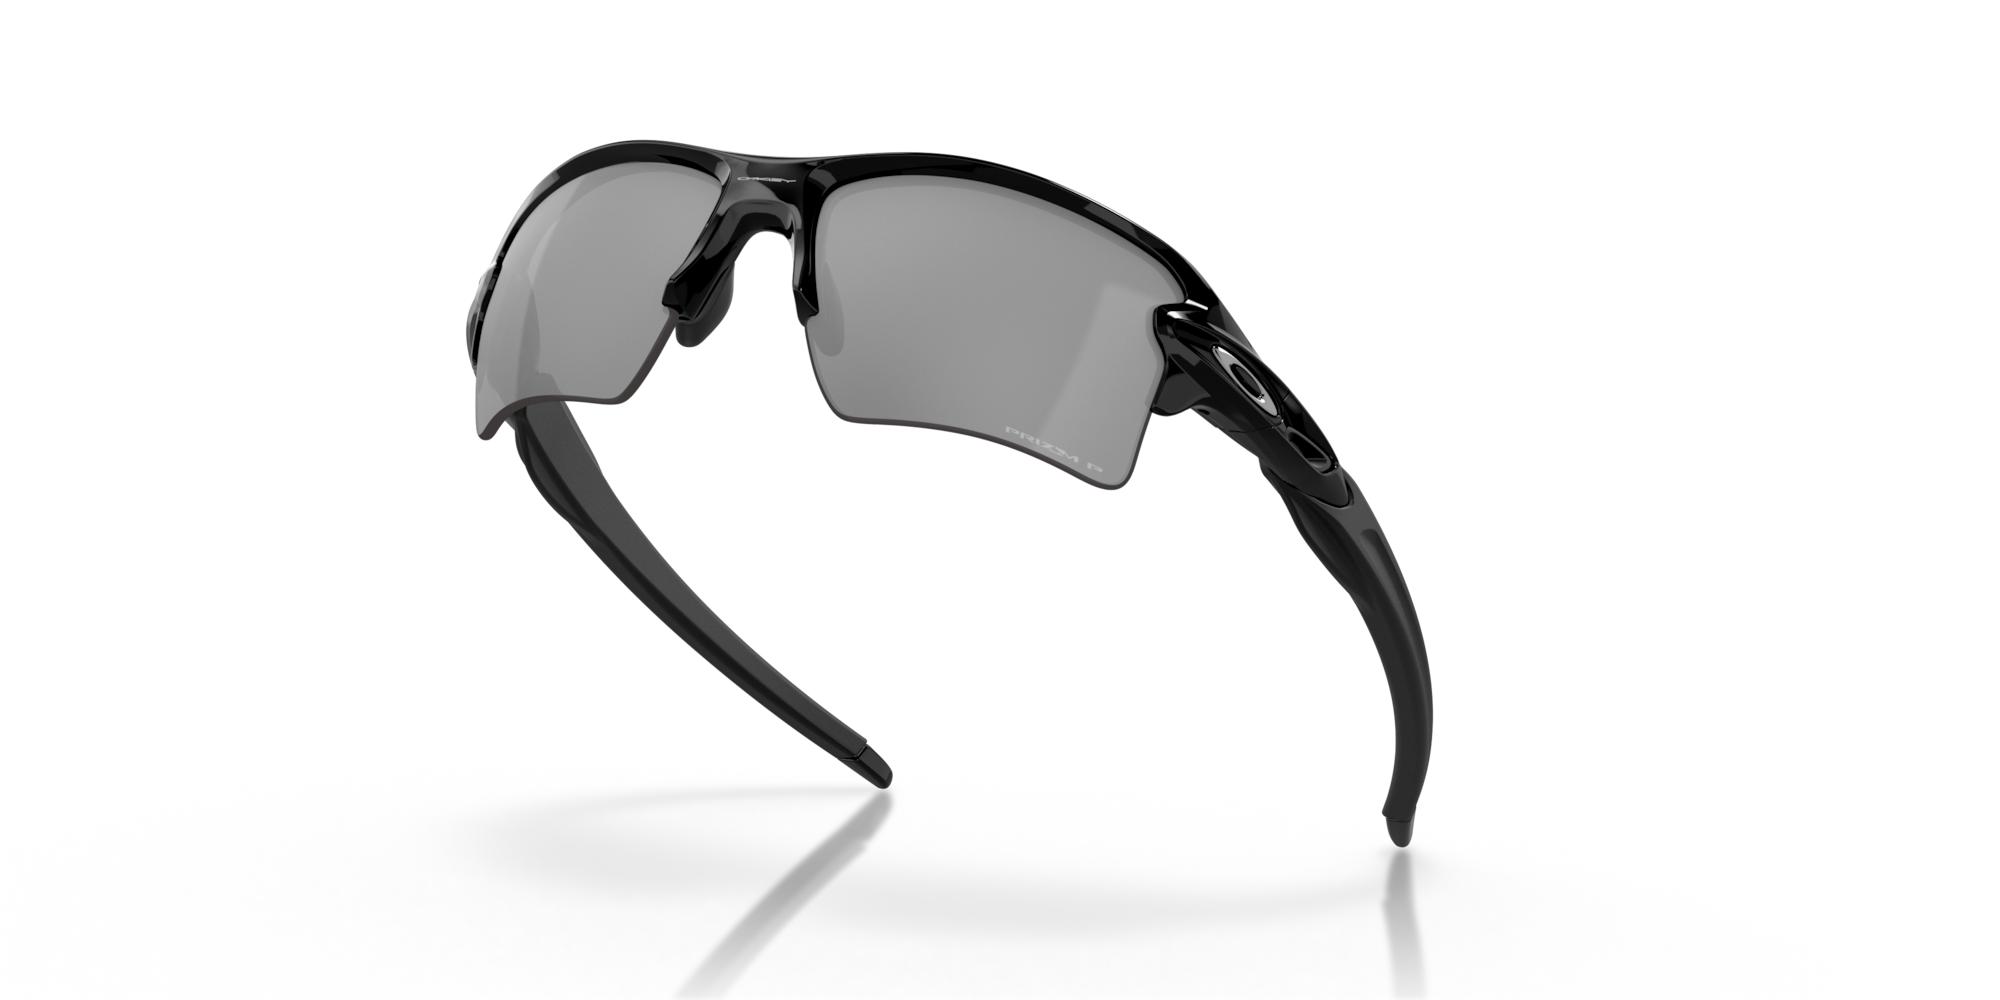 Flak® 2.0 XL Prizm Black Polarized Lenses, Polished Black Frame Sunglasses